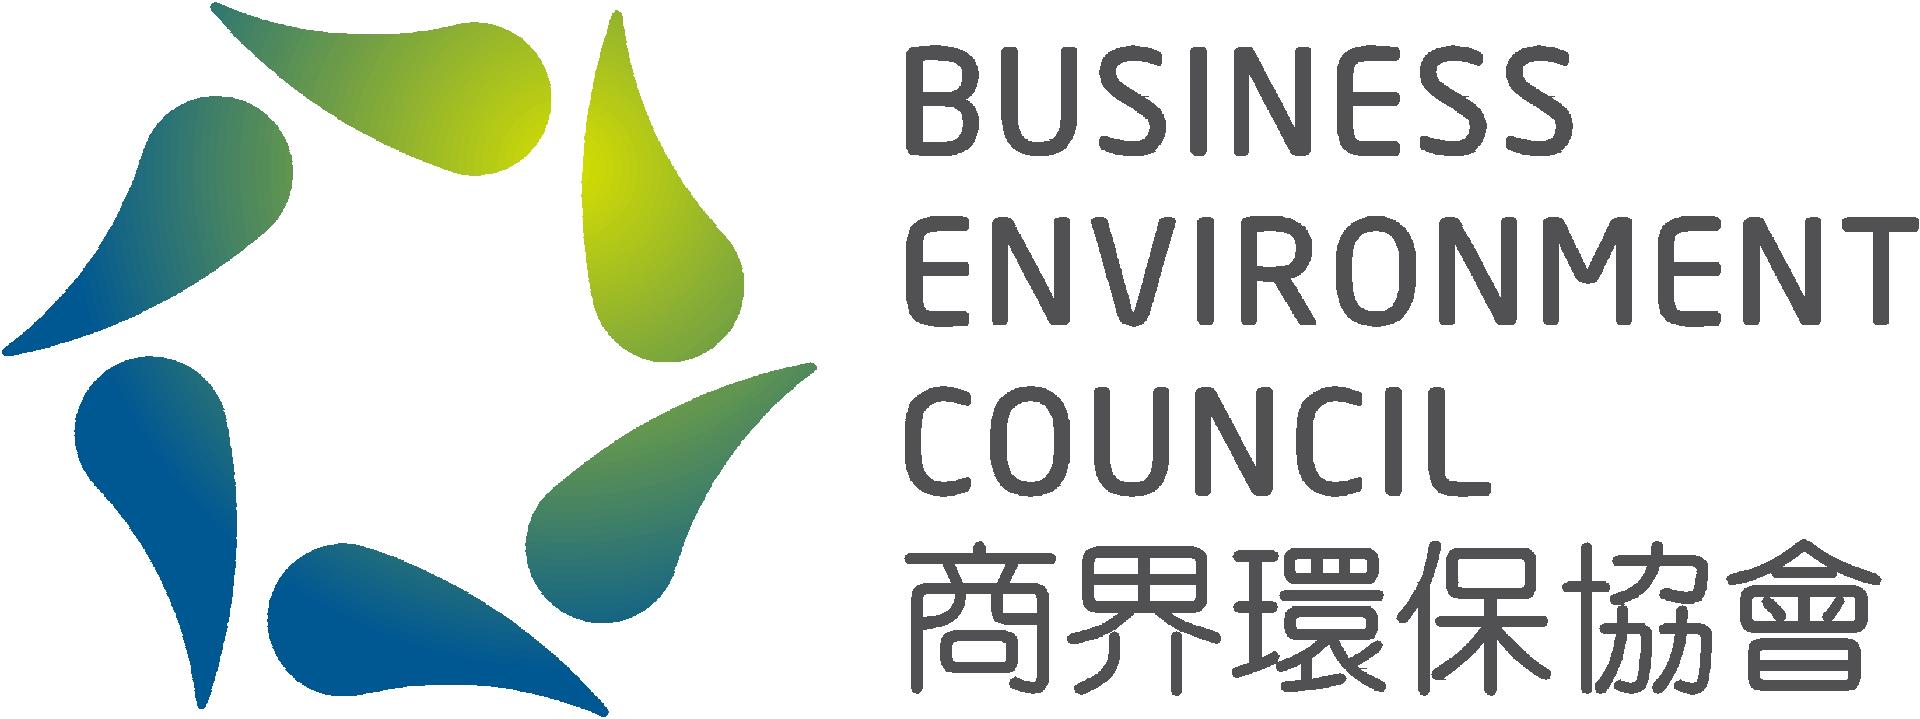 Business Environment Council (BEC)